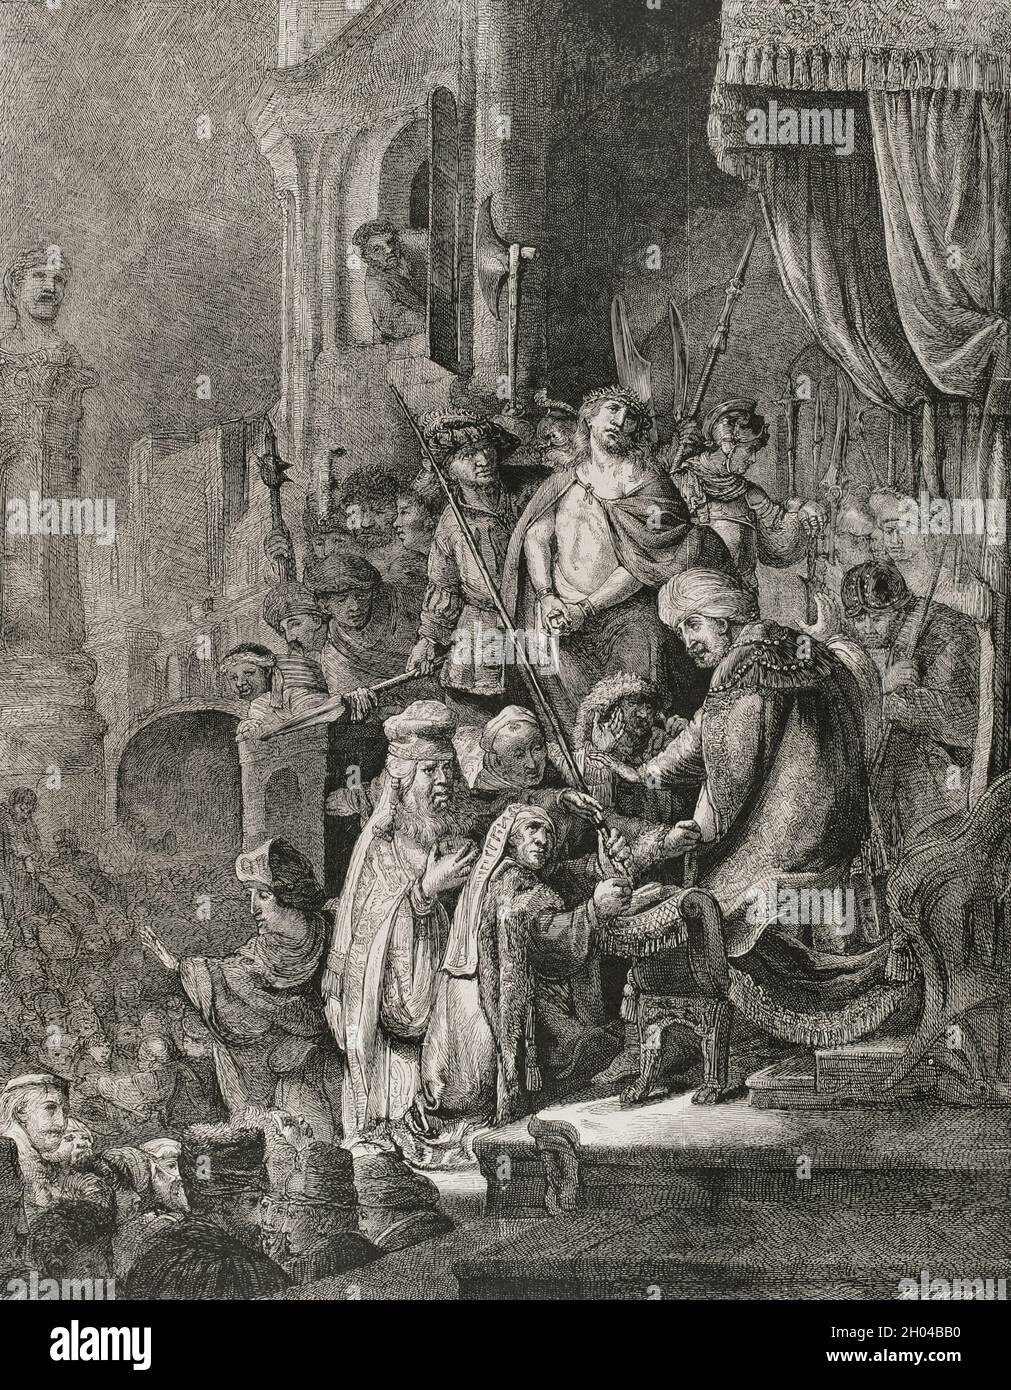 Neues Testament. Jesus Christus vor Pontius Pilatus. Faksimile einer Radierung von P. Rembrandt. La Ilustración Española y Americana, 1878. Stockfoto